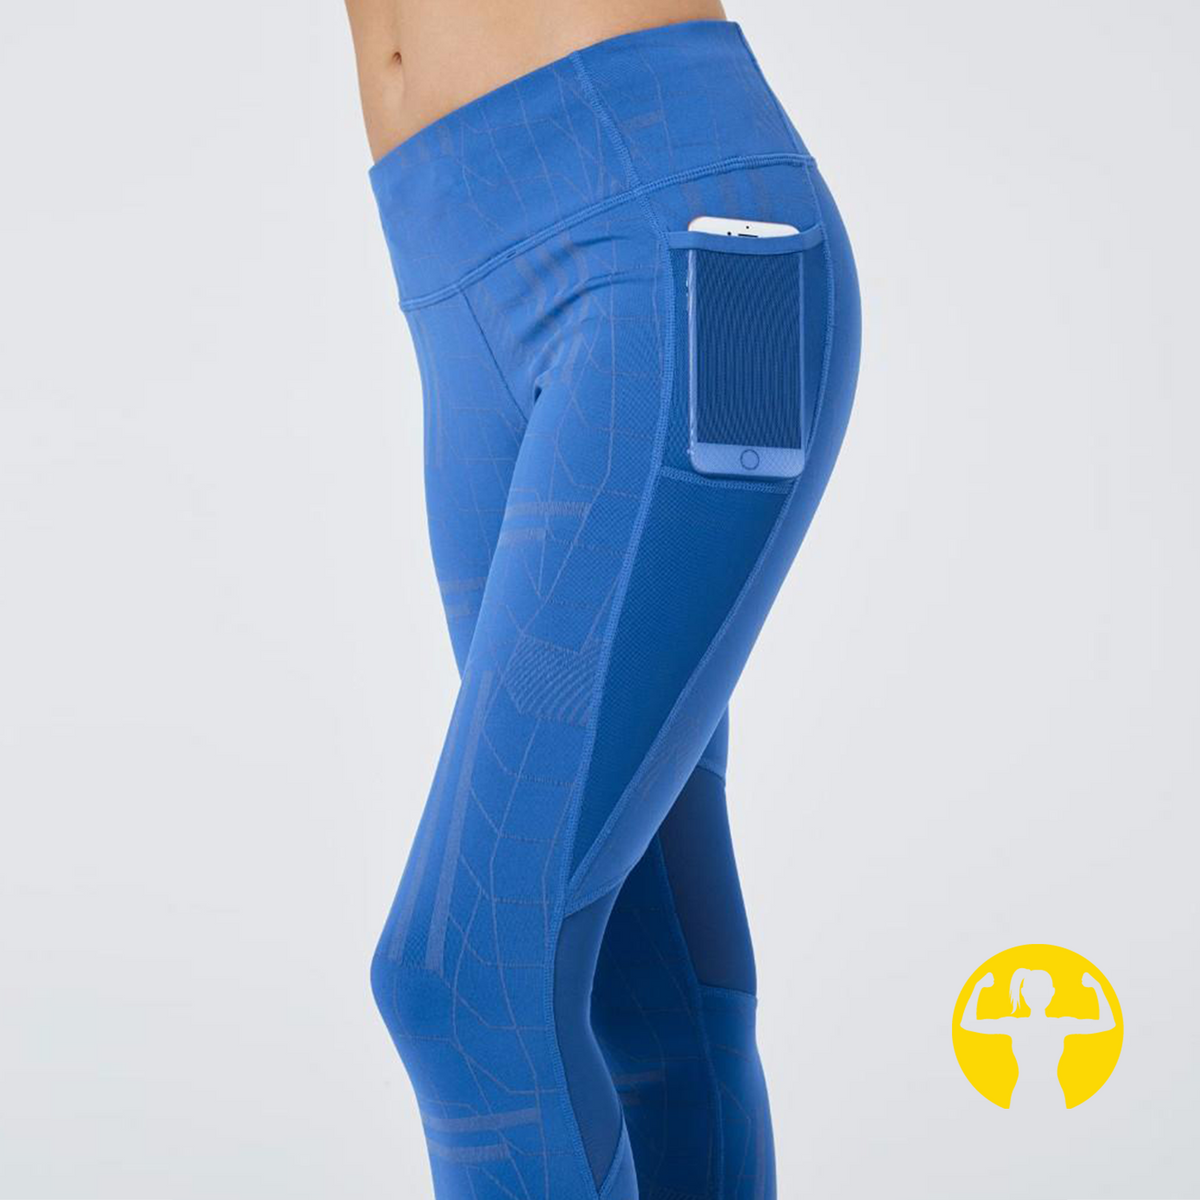 Asskicker Activewear, Reflective Pocket Leggings